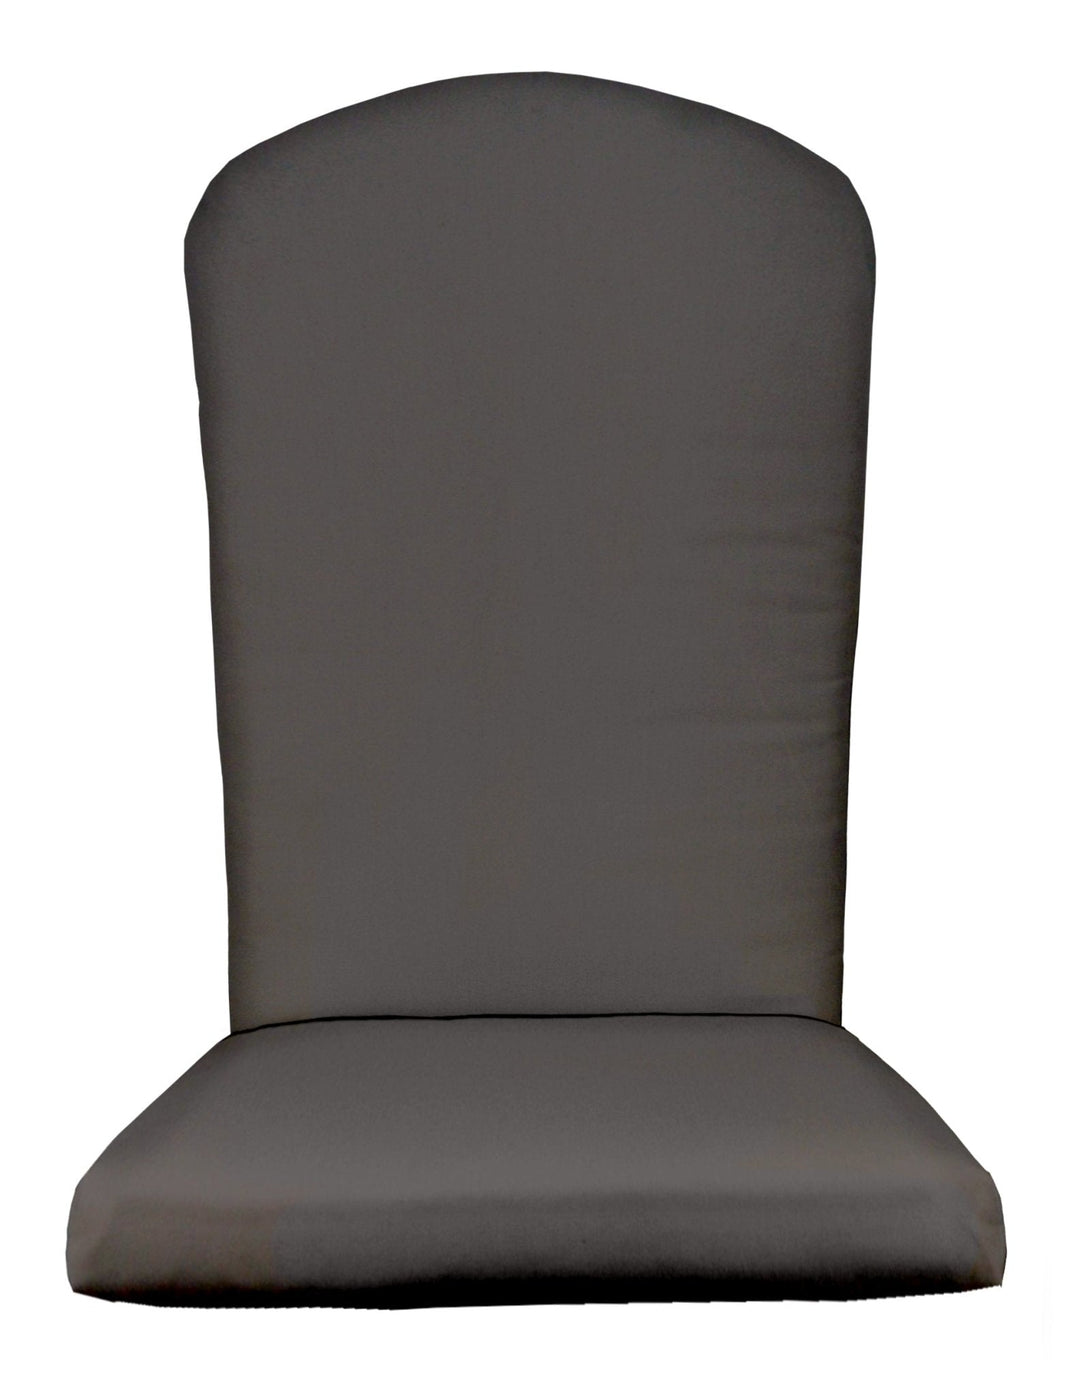 Foam Adirondack Cushion | 41" H x 19" W x 2" Thick | Sunbrella Performance Fabric | Sunbrella Canvas Charcoal Grey - RSH Decor